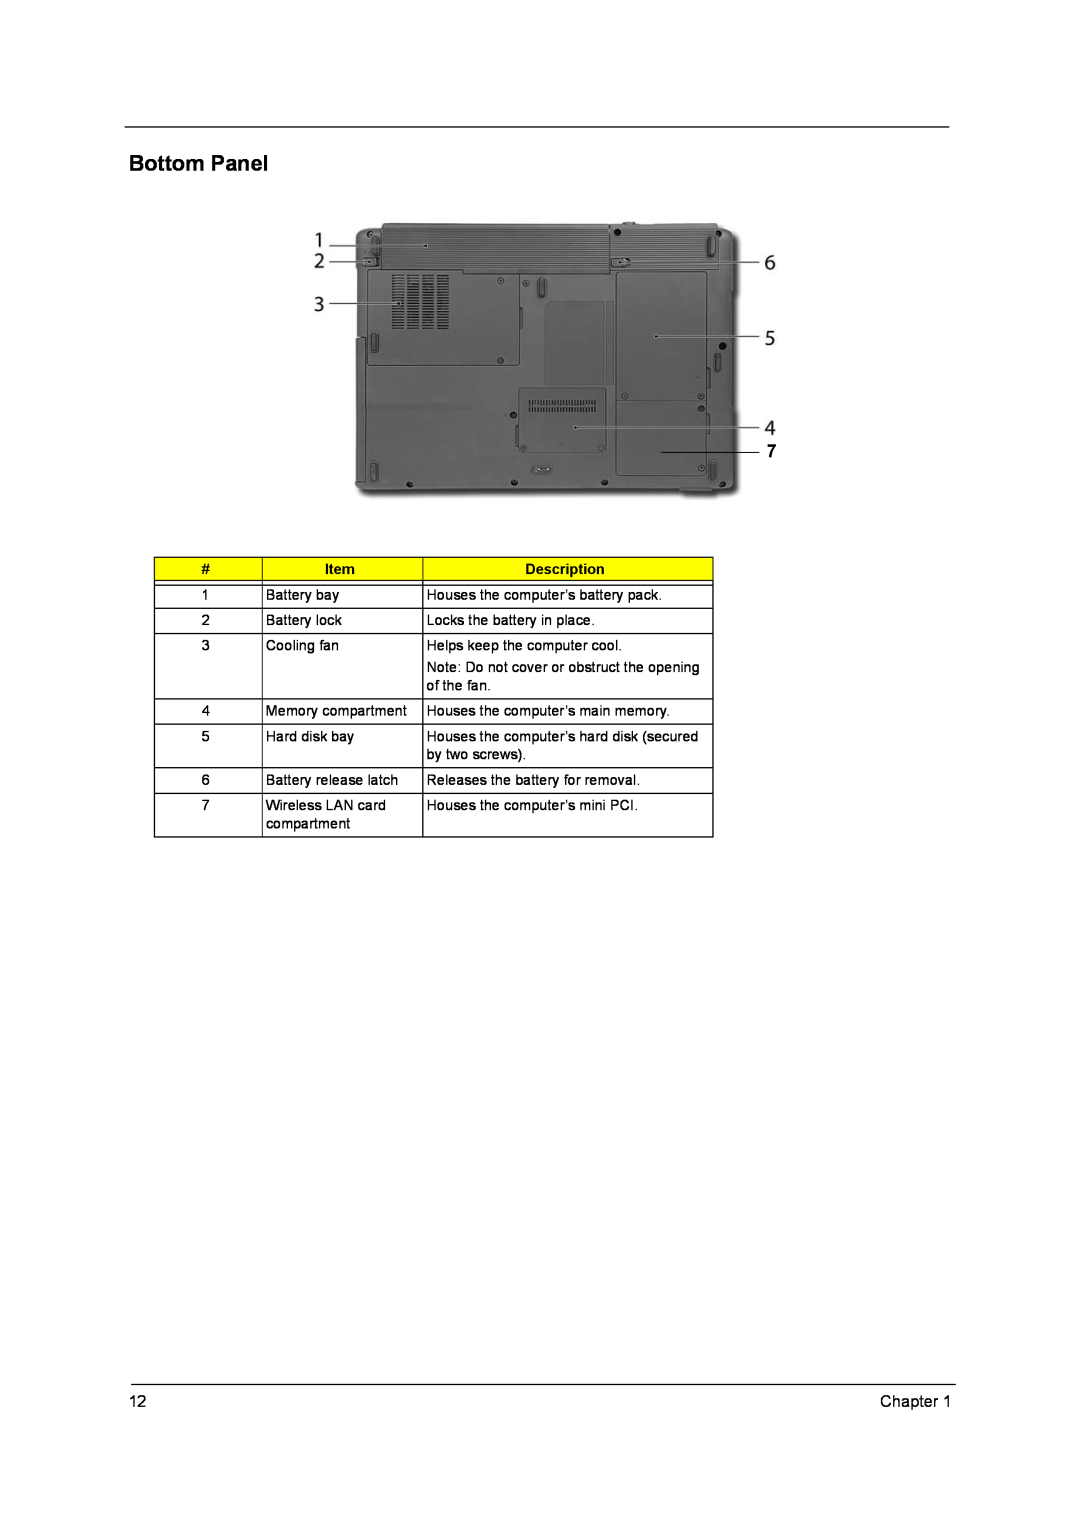 Acer 2400, 3220, 3230, 3210 manual Bottom Panel, Description 